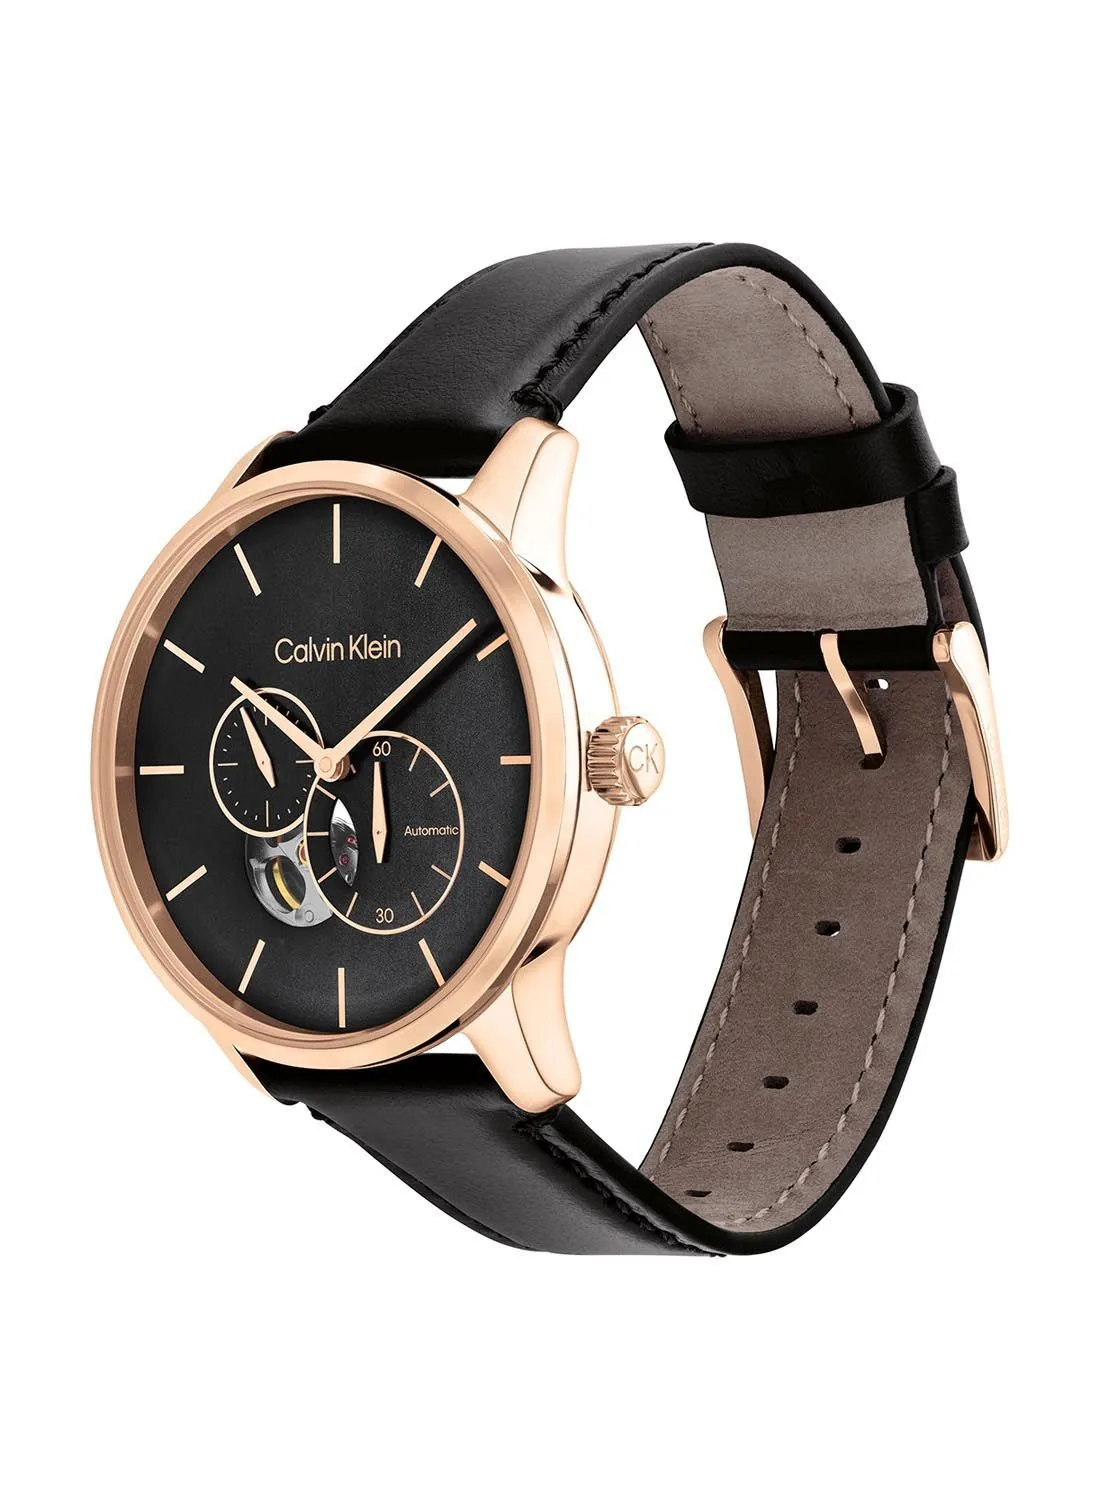 CALVIN KLEIN Analog Round Waterproof  Wrist Watch With Leather Strap  25200074